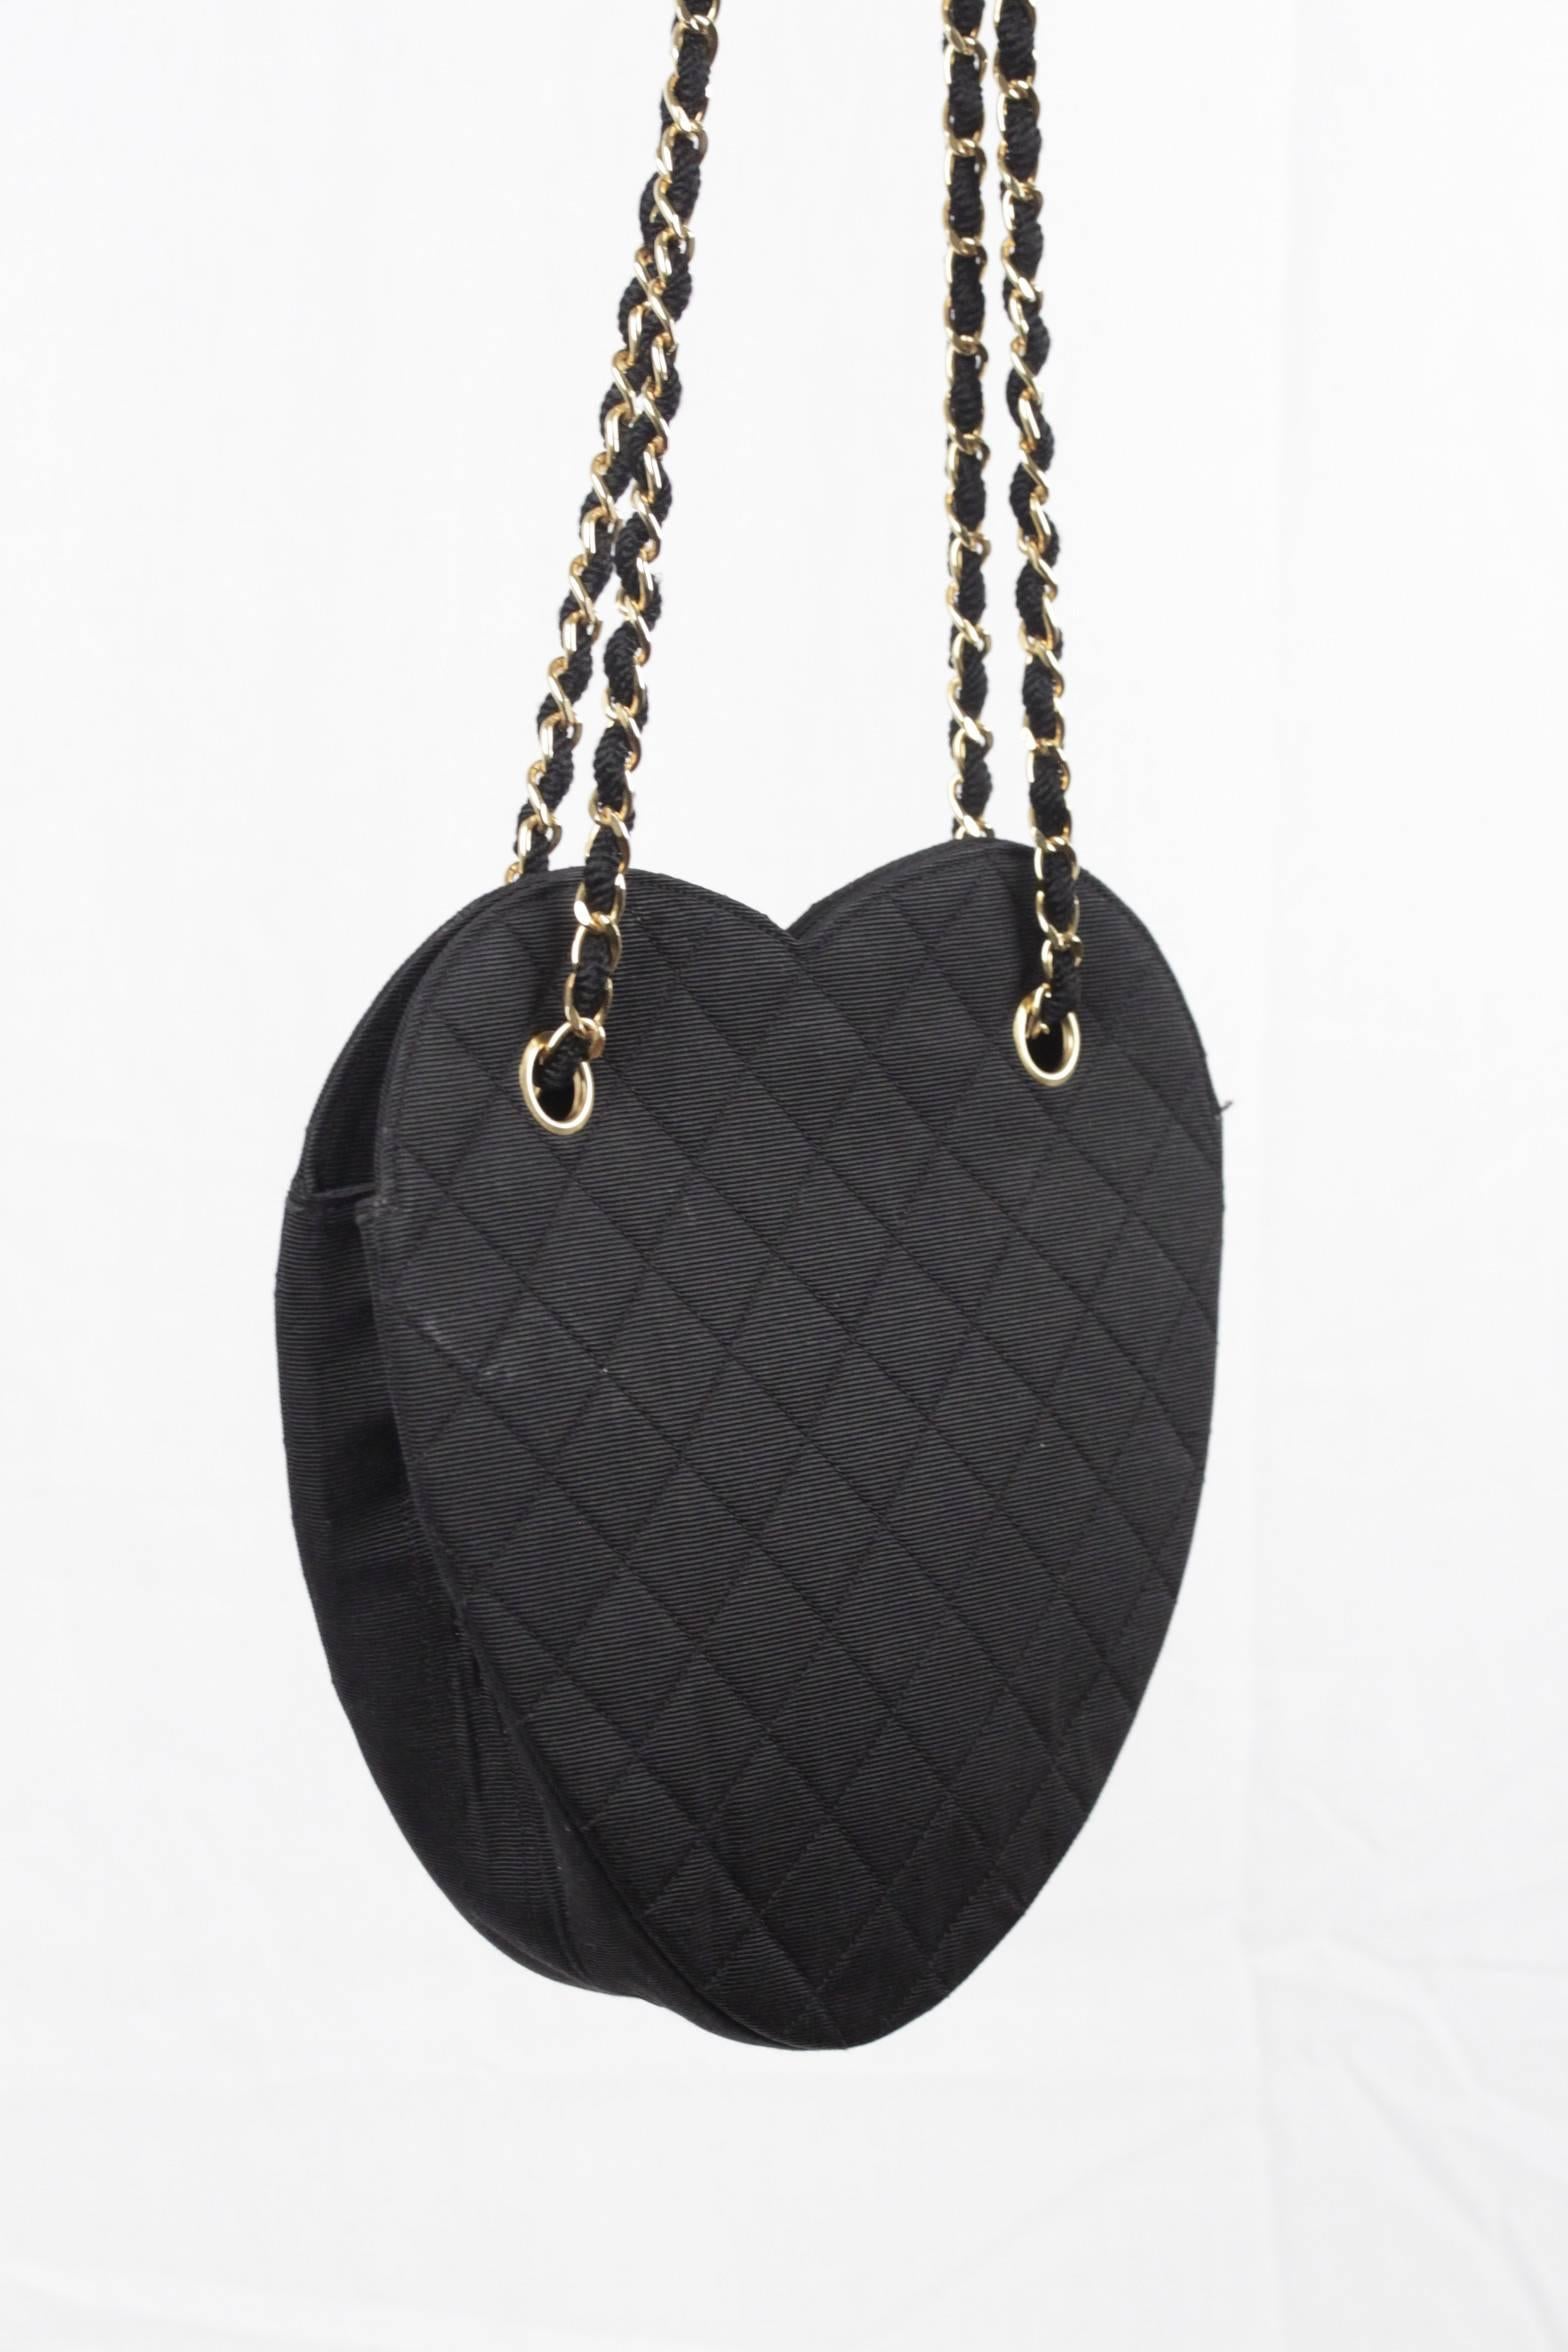 chanel heart-shaped vintage bag